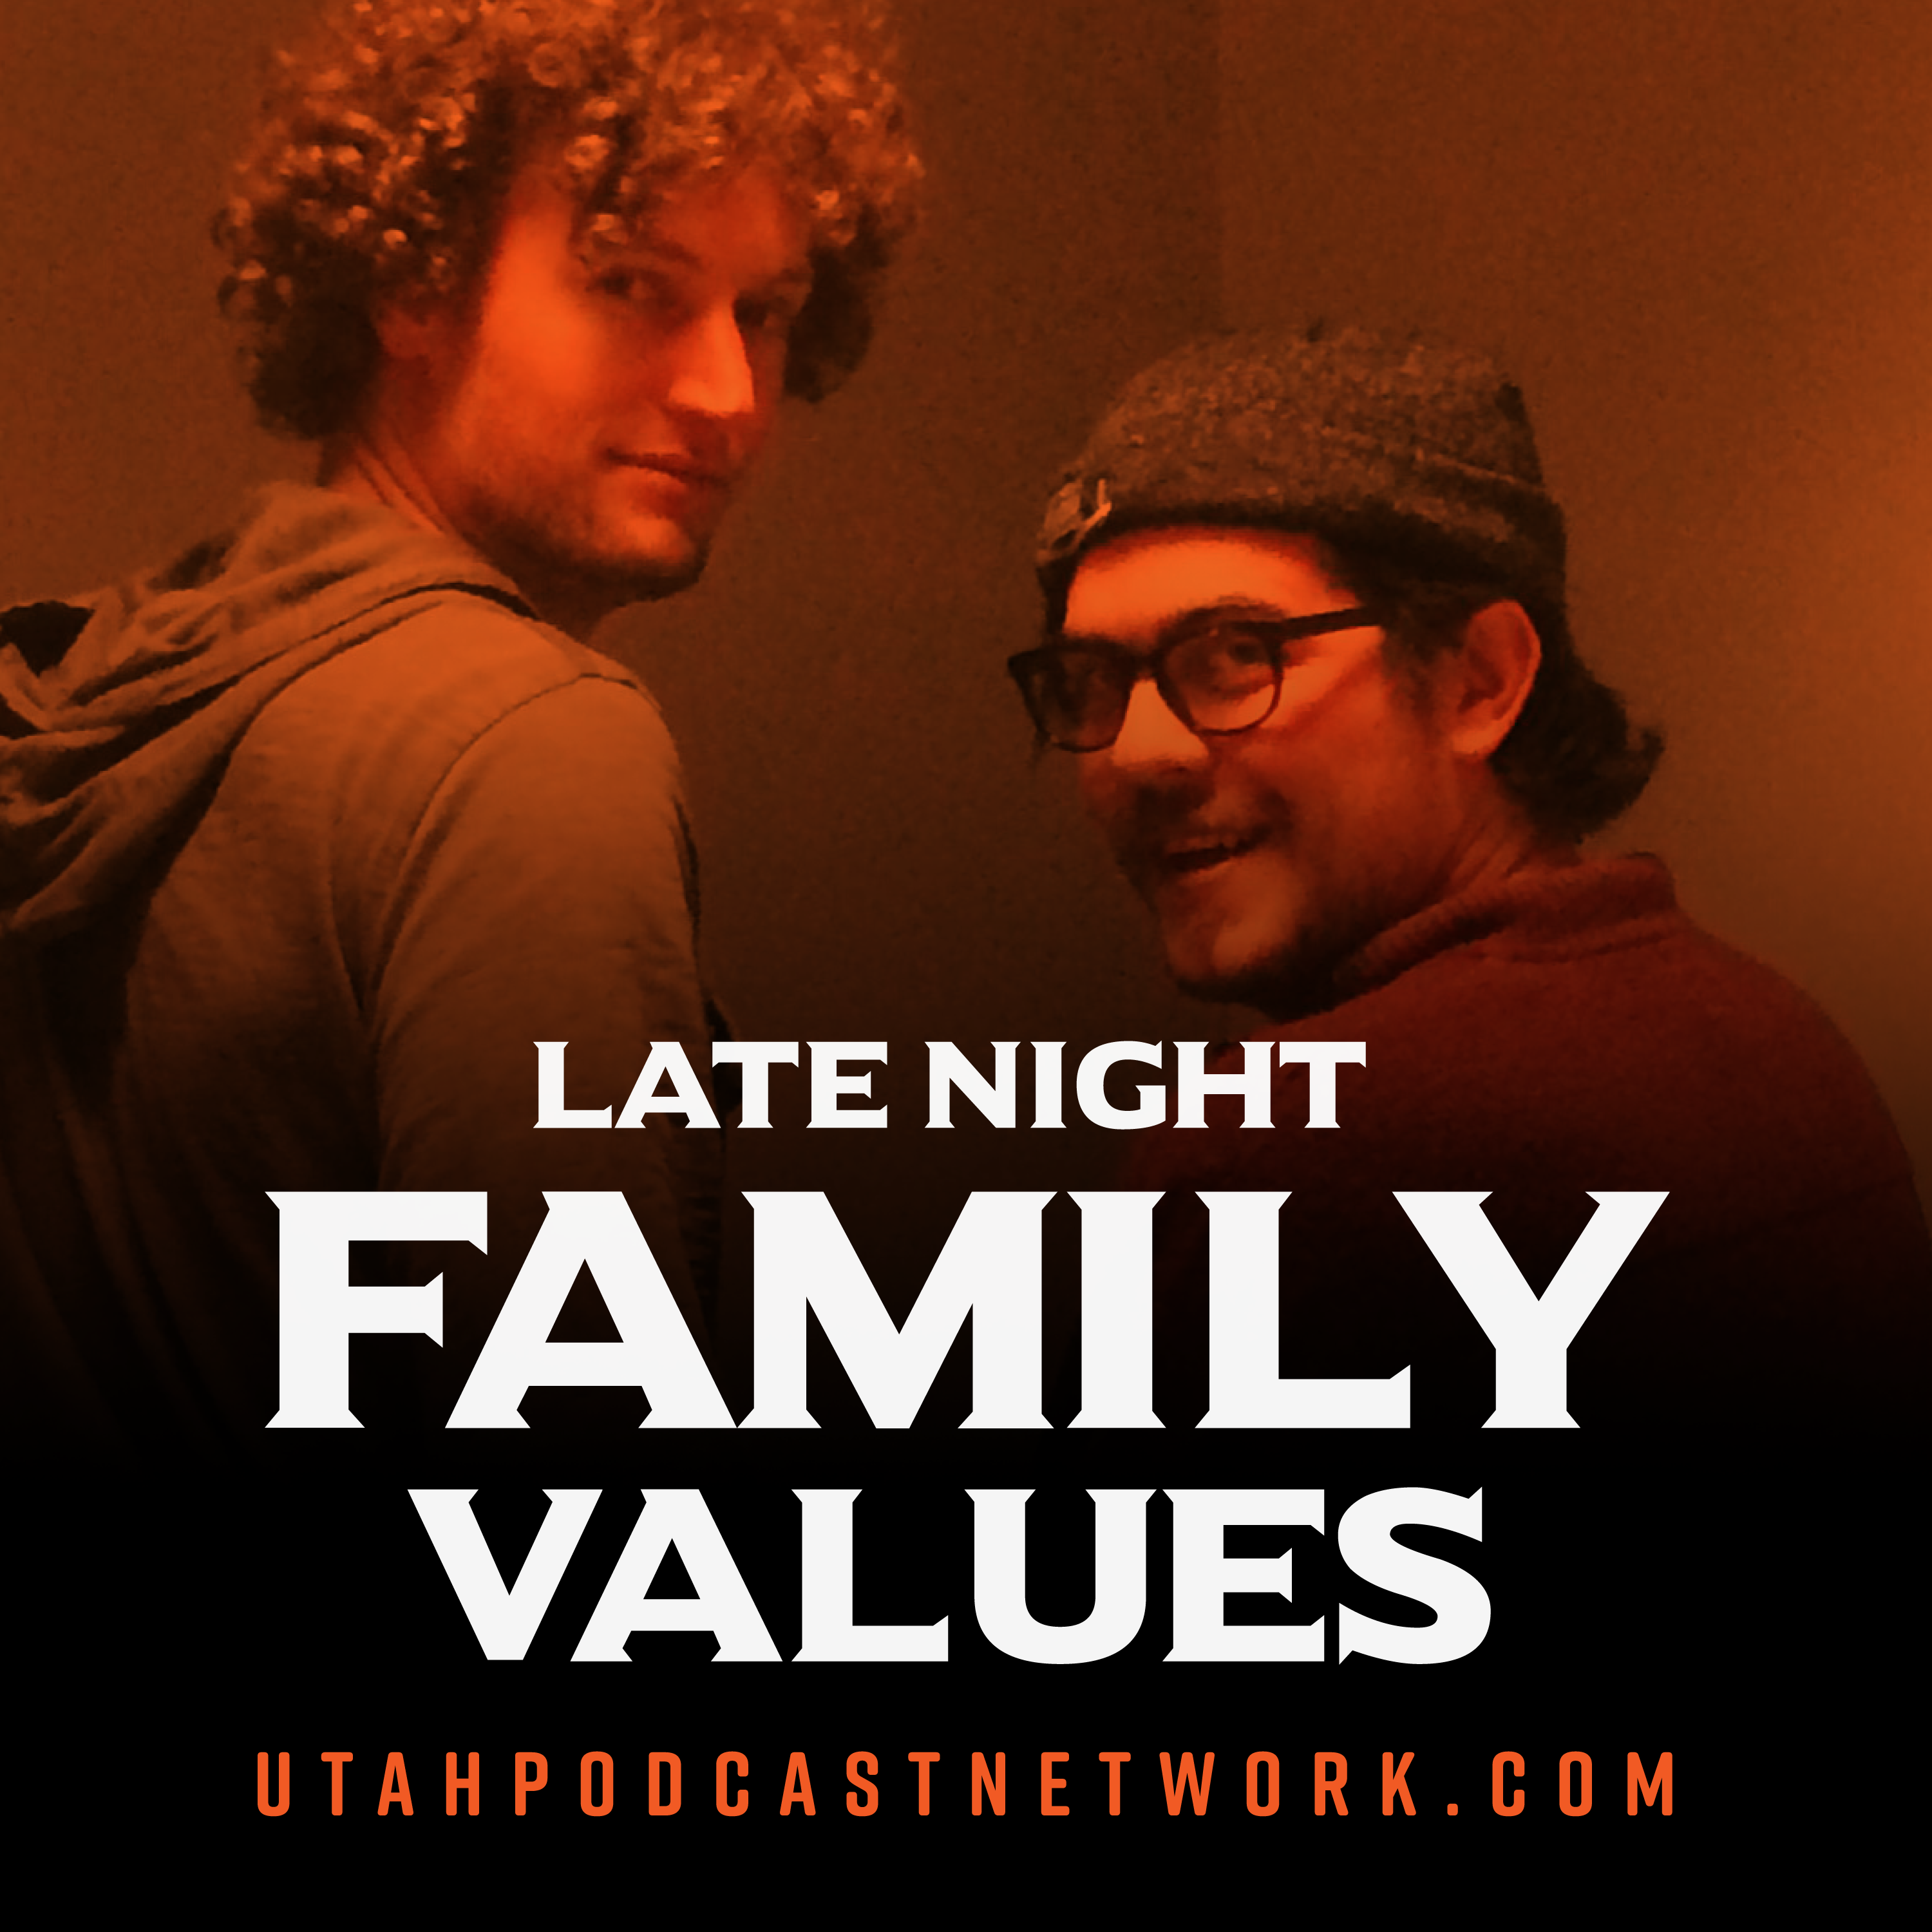 LATE NIGHT FAMILY VALUES